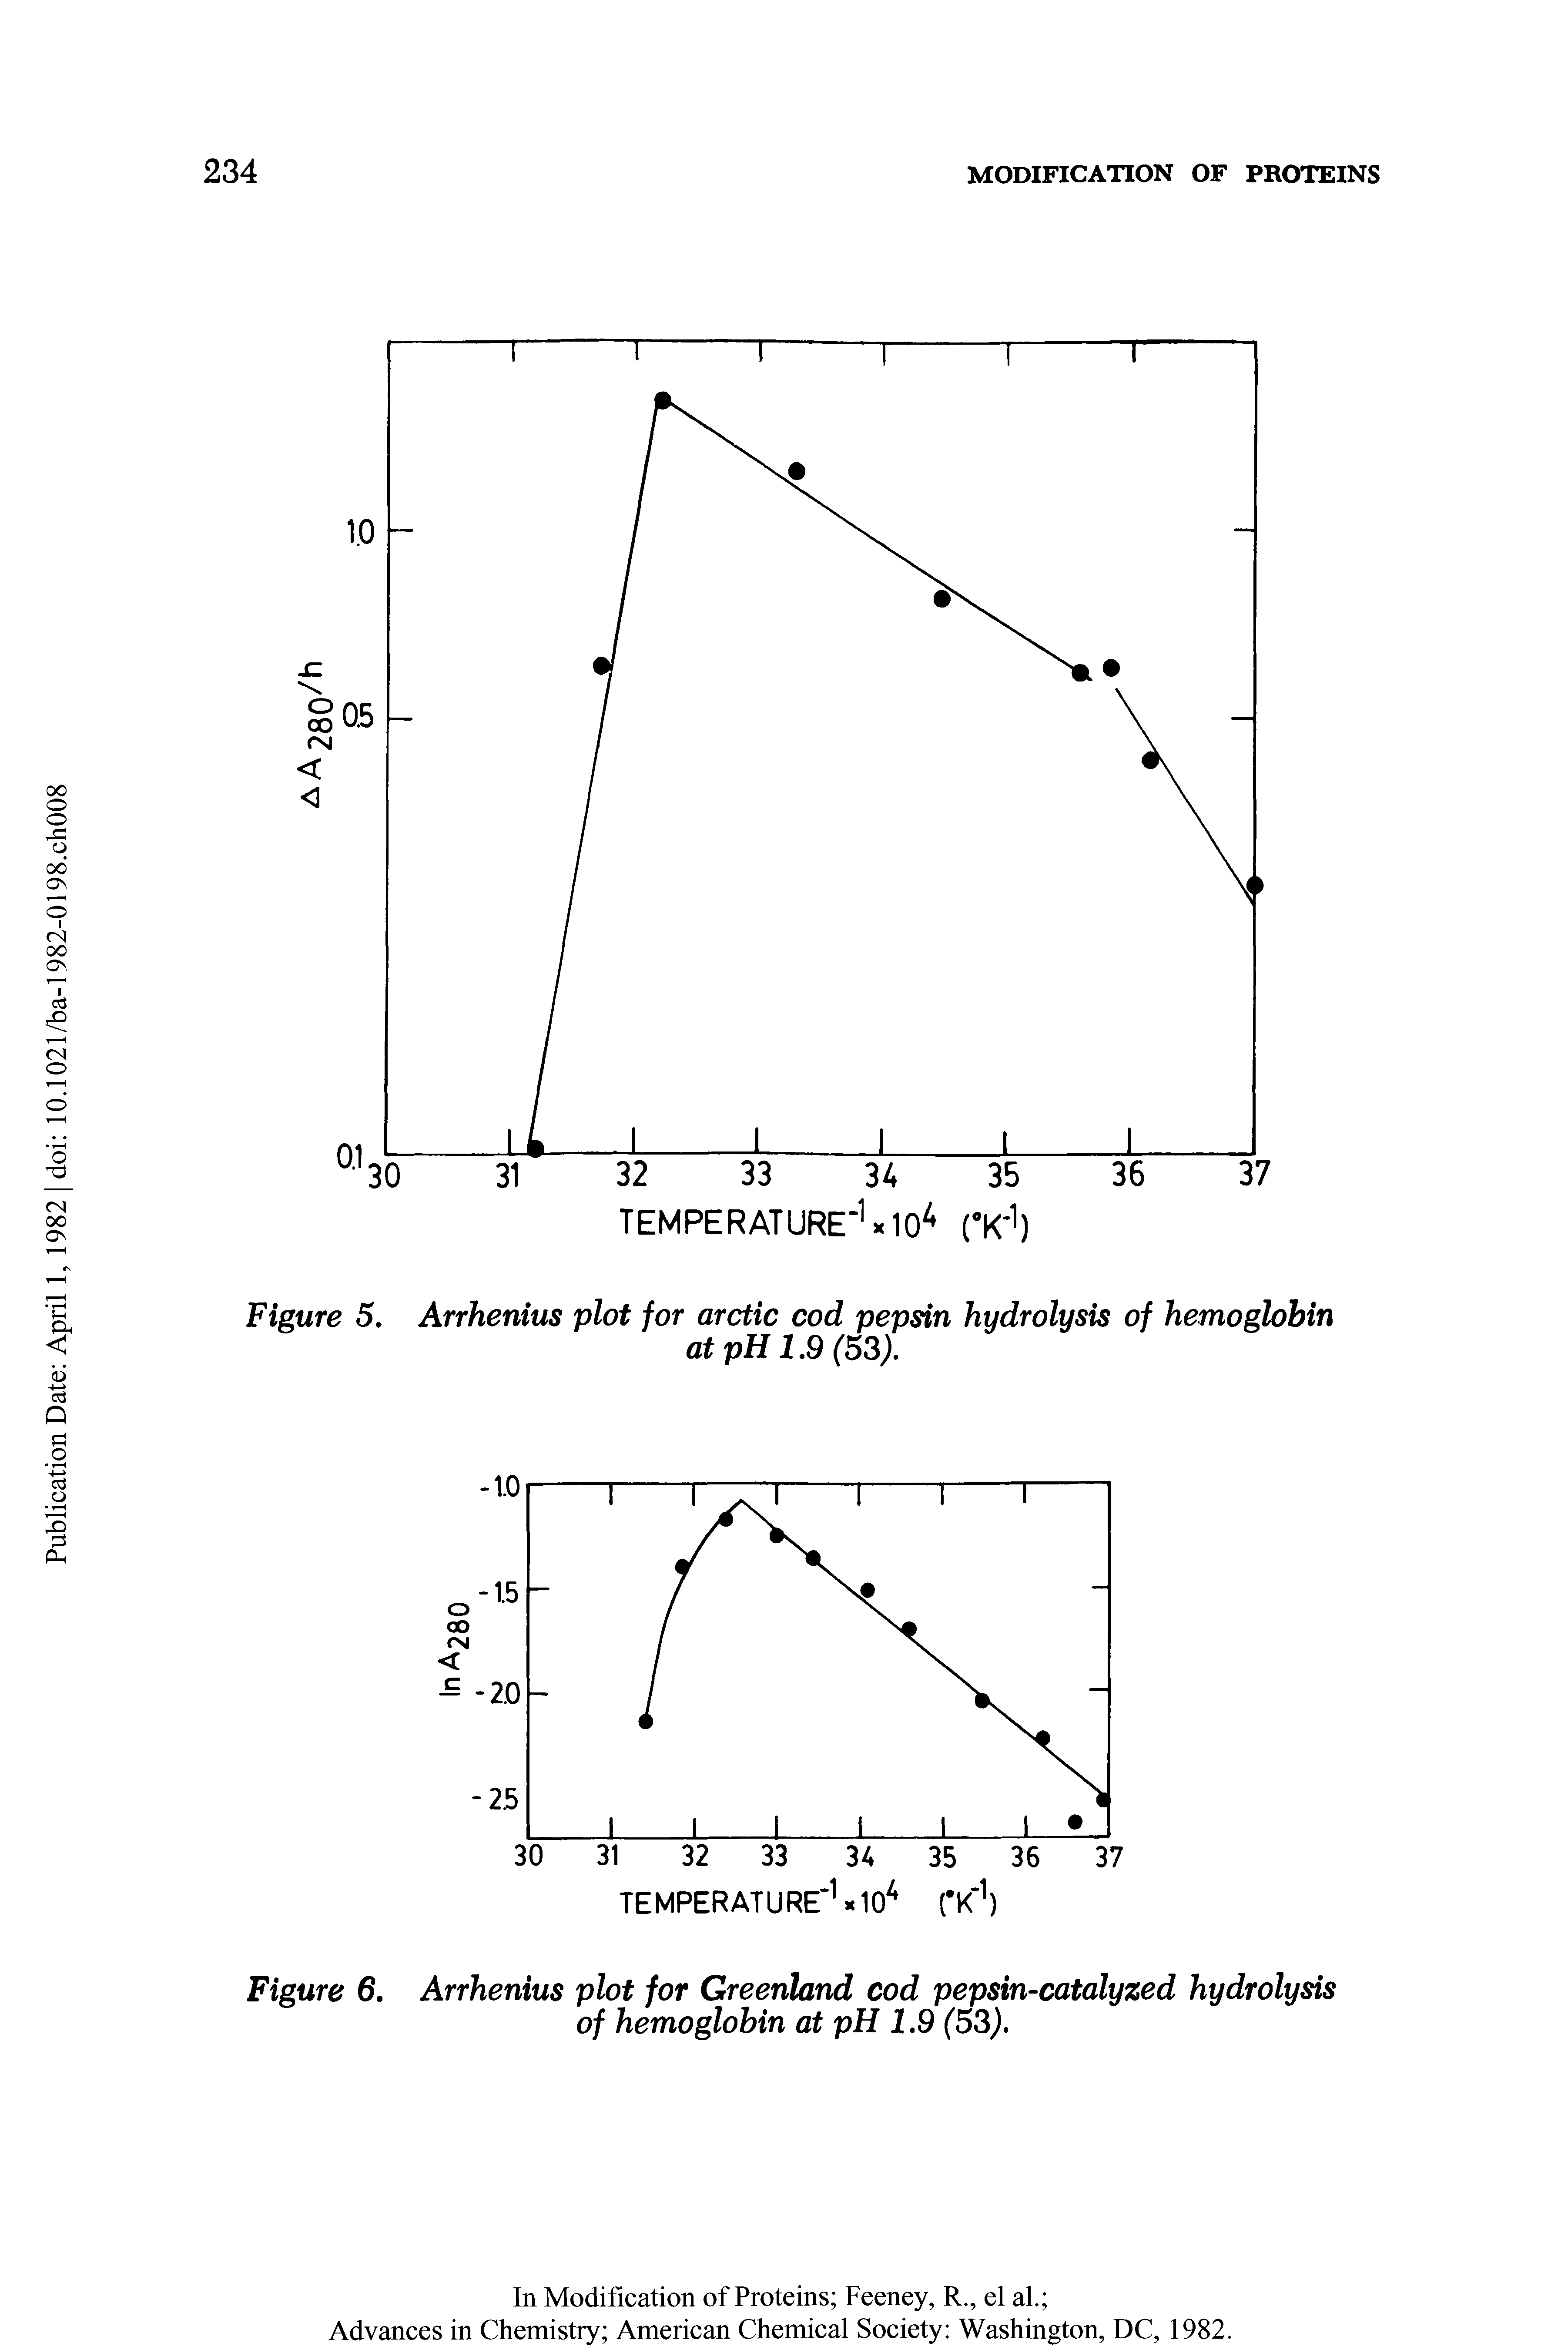 Figure 6. Arrhenius plot for Greenland cod pepsin-catalyzed hydrolysis of hemoglobin at pH 1.9 (53).